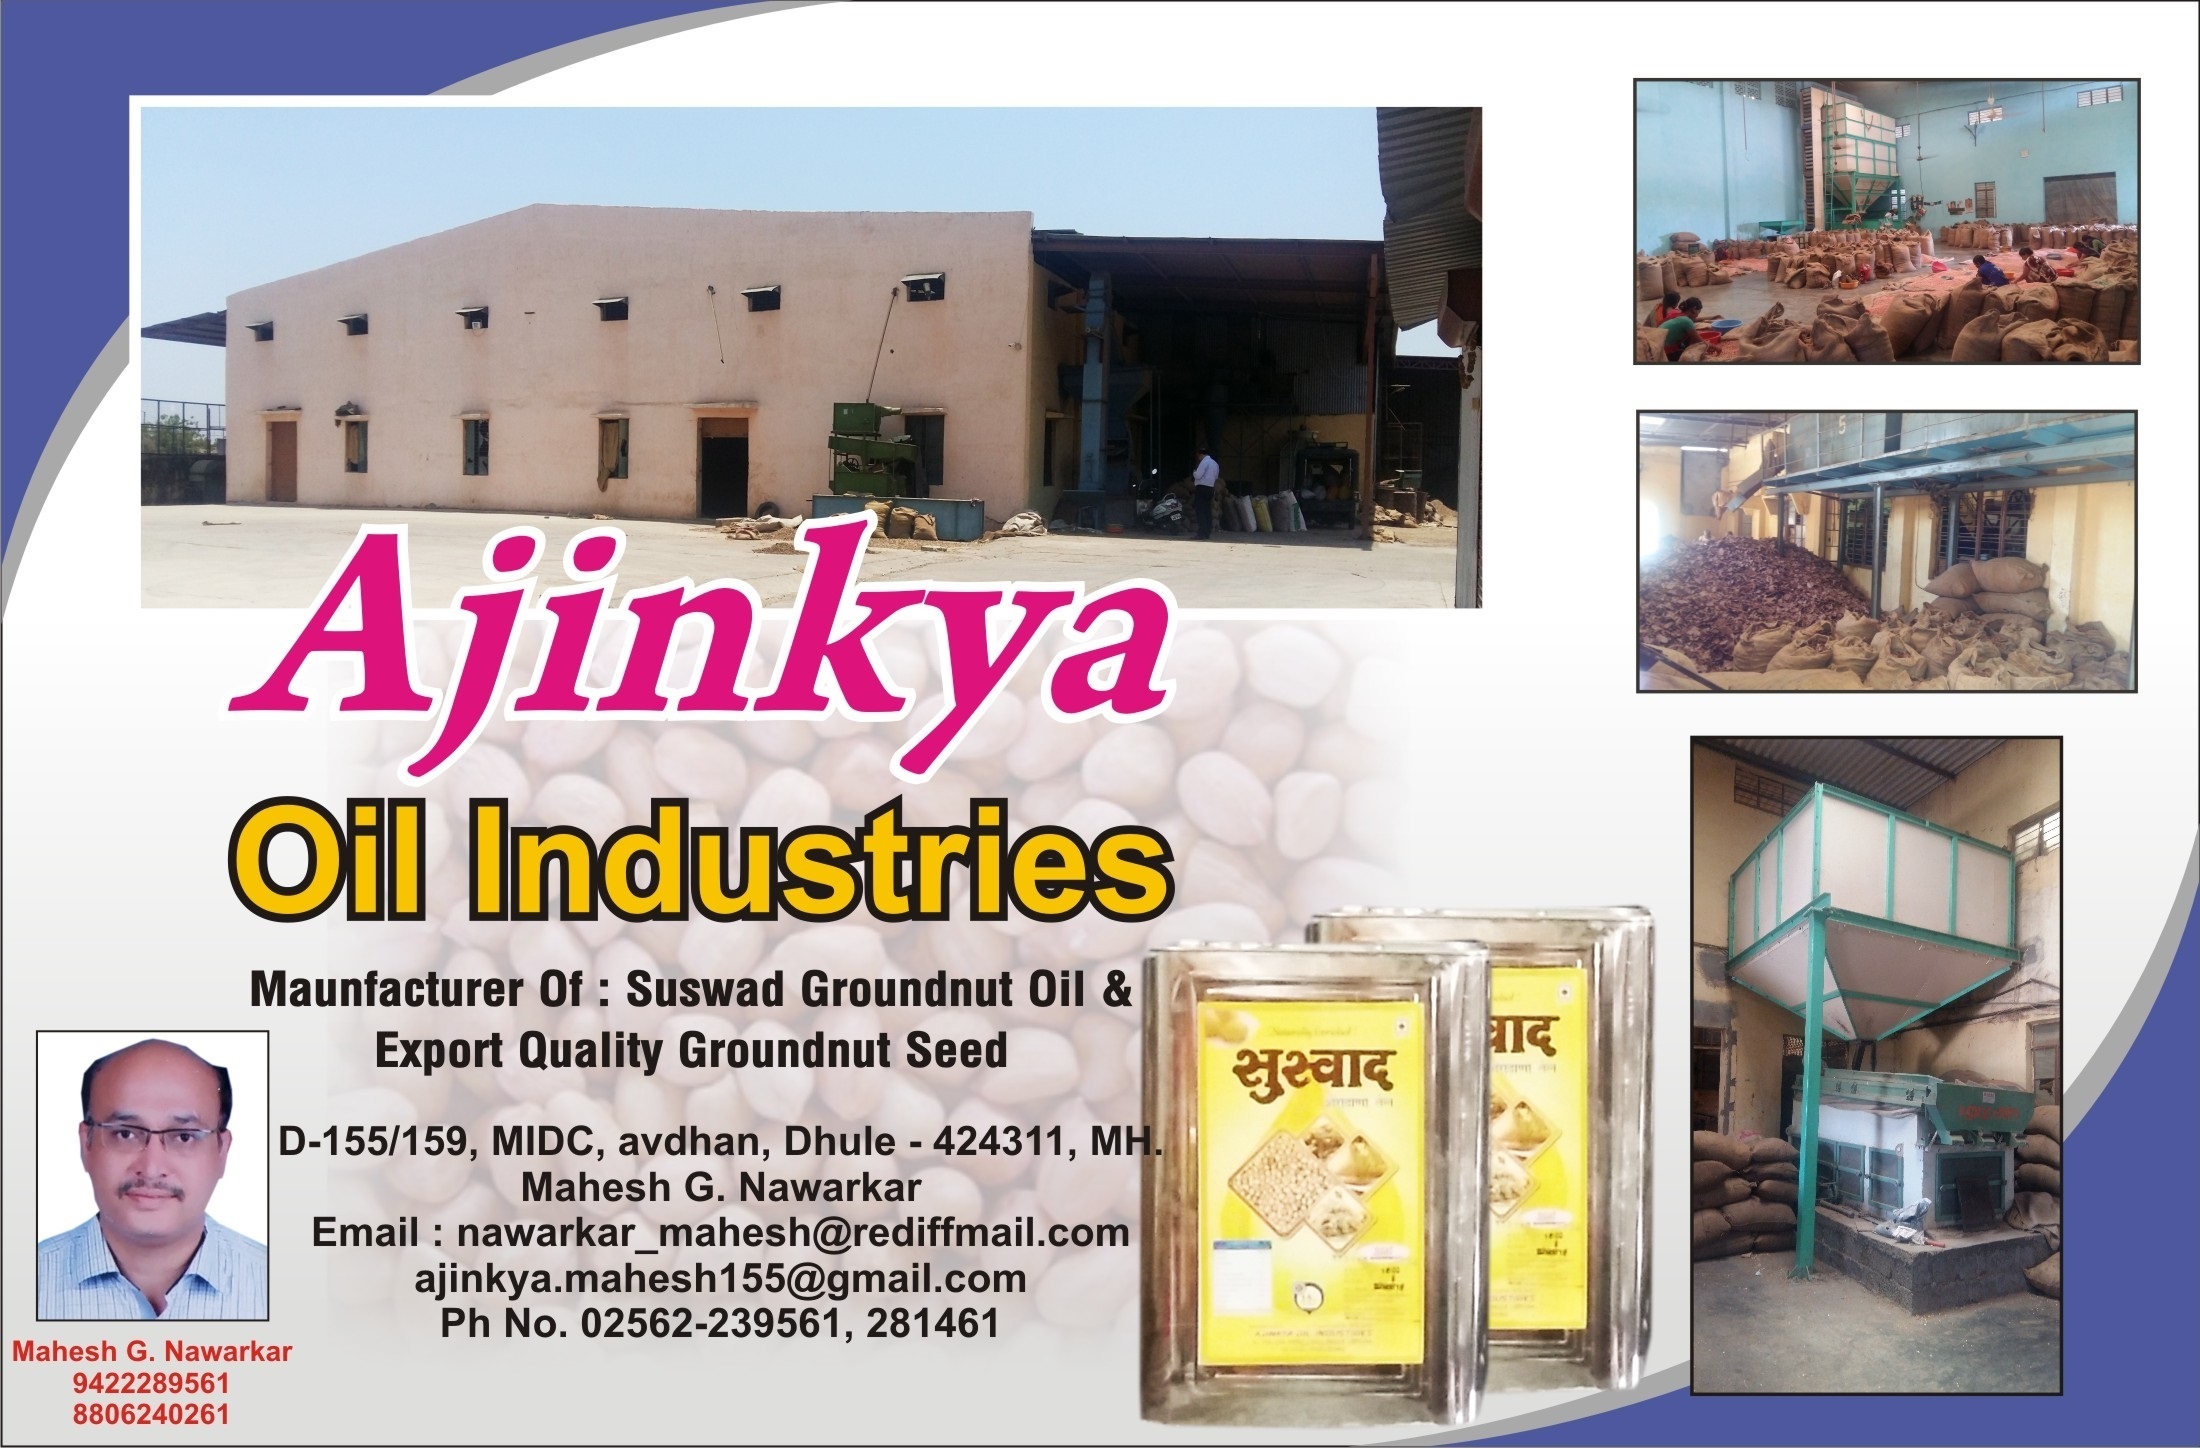 Ajinkya Oil Industries - Manufacturer Of Groundnut Oil And Groundnut Seeds